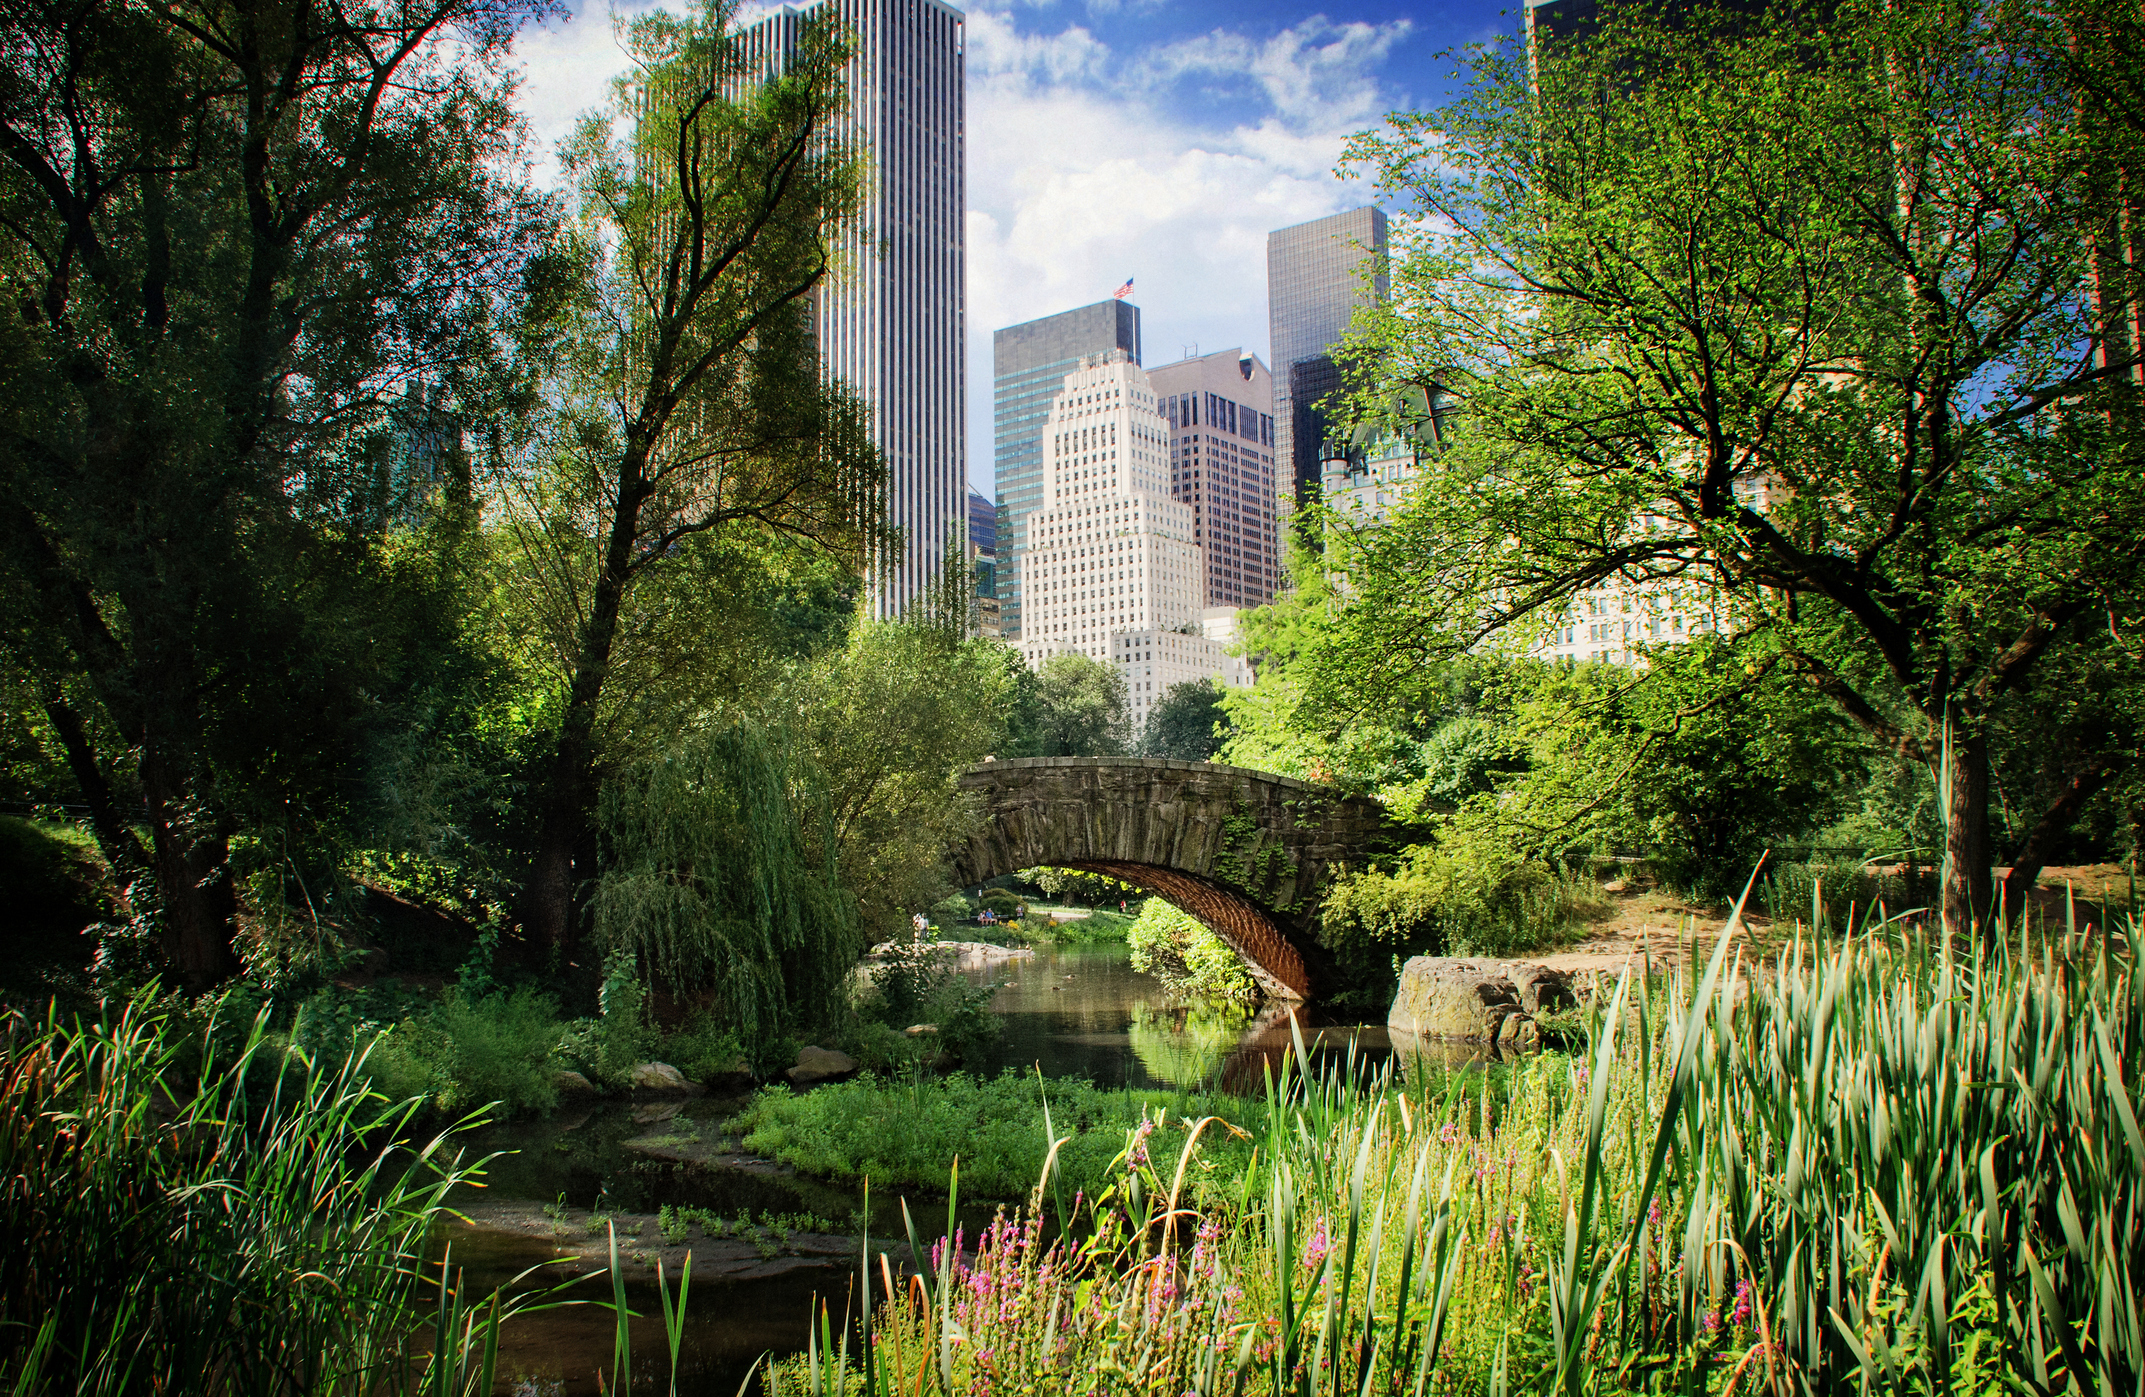 Lush Summer Greens and Central Park's Gapstow Bridge